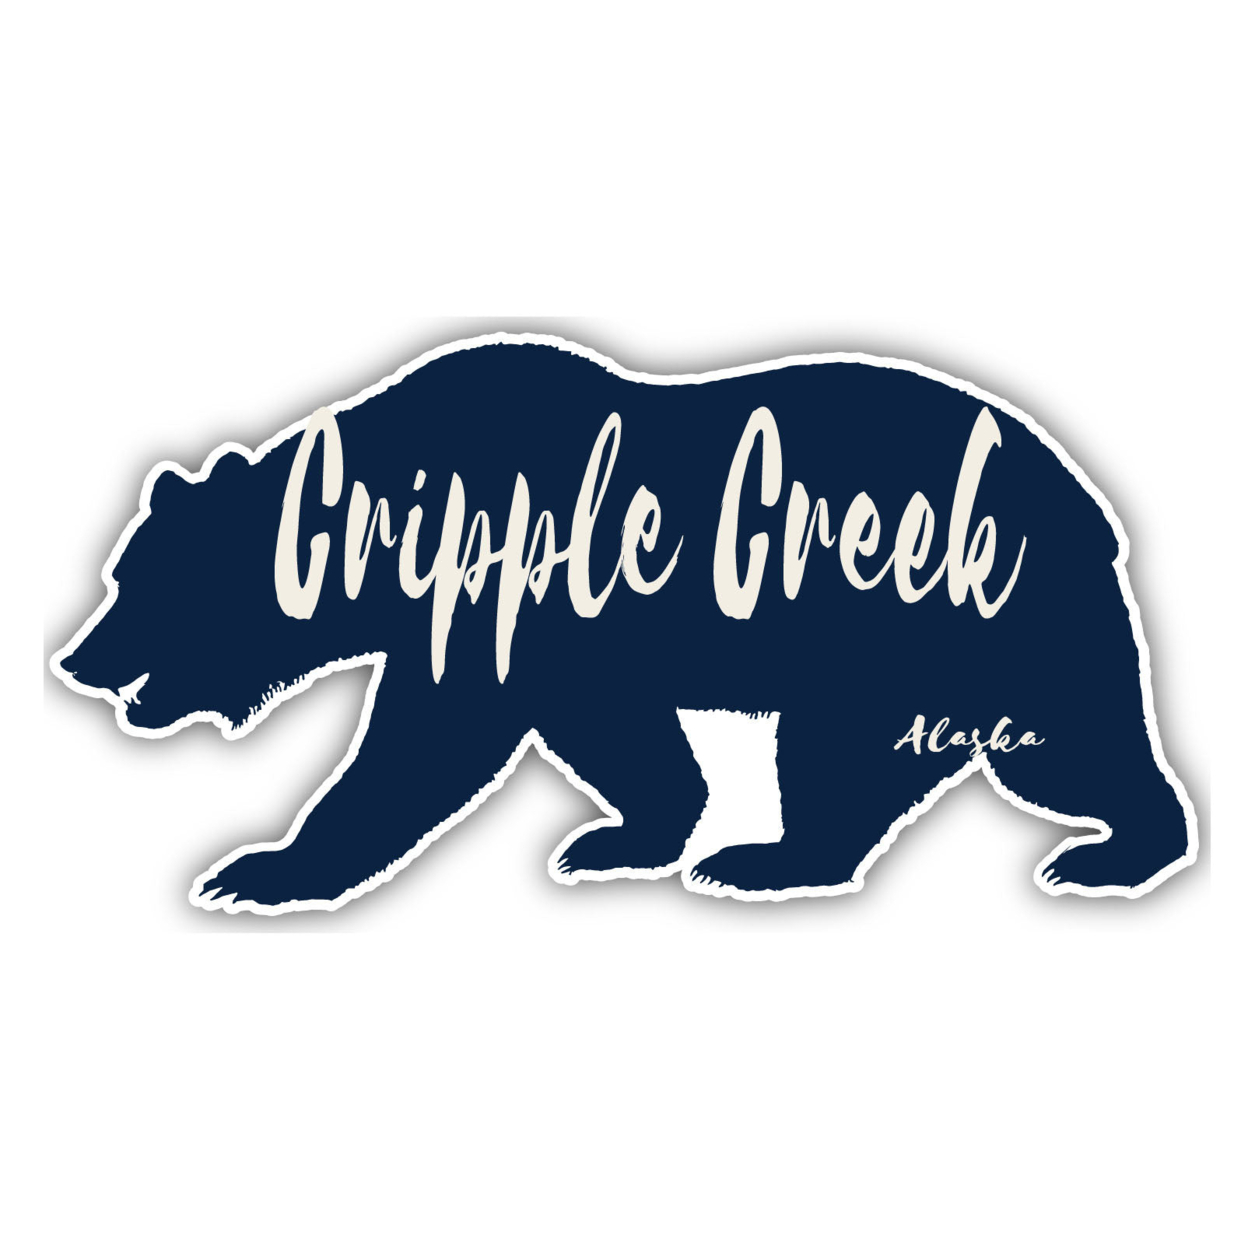 Cripple Creek Alaska Souvenir Decorative Stickers (Choose Theme And Size) - 4-Pack, 2-Inch, Bear